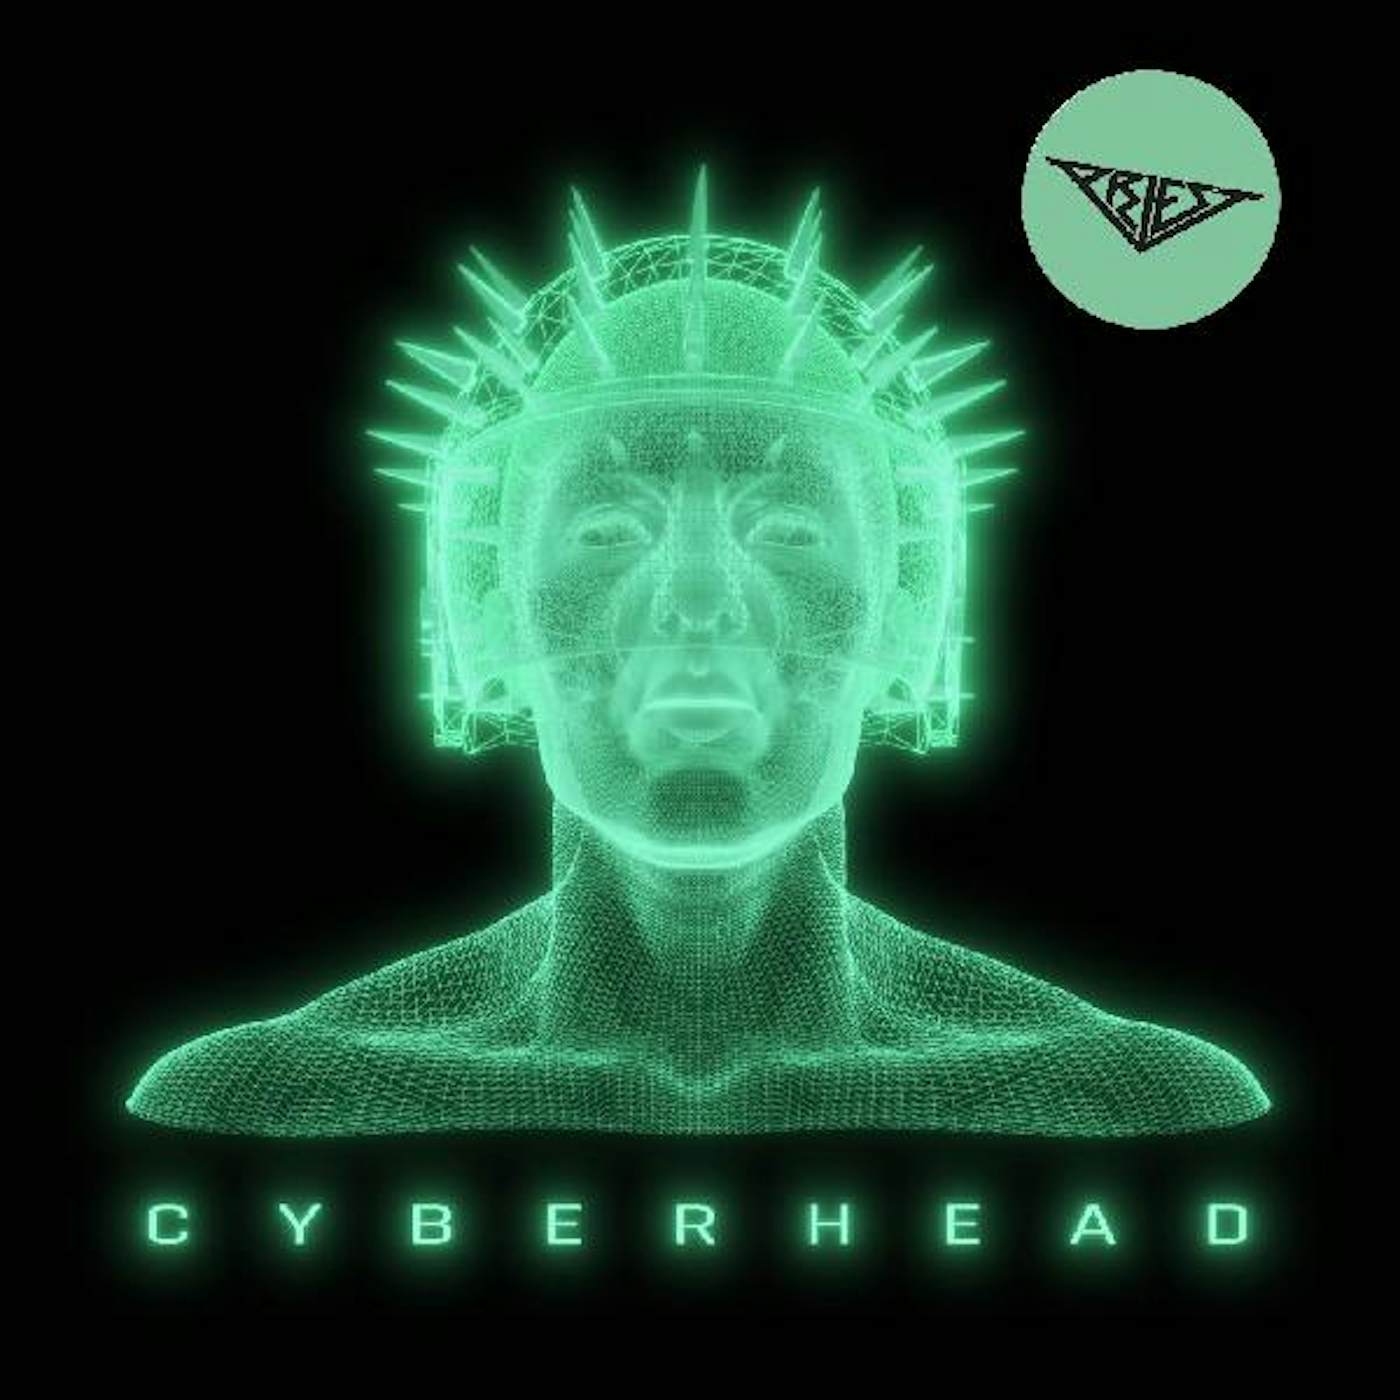 Priest Cyberhead Vinyl Record